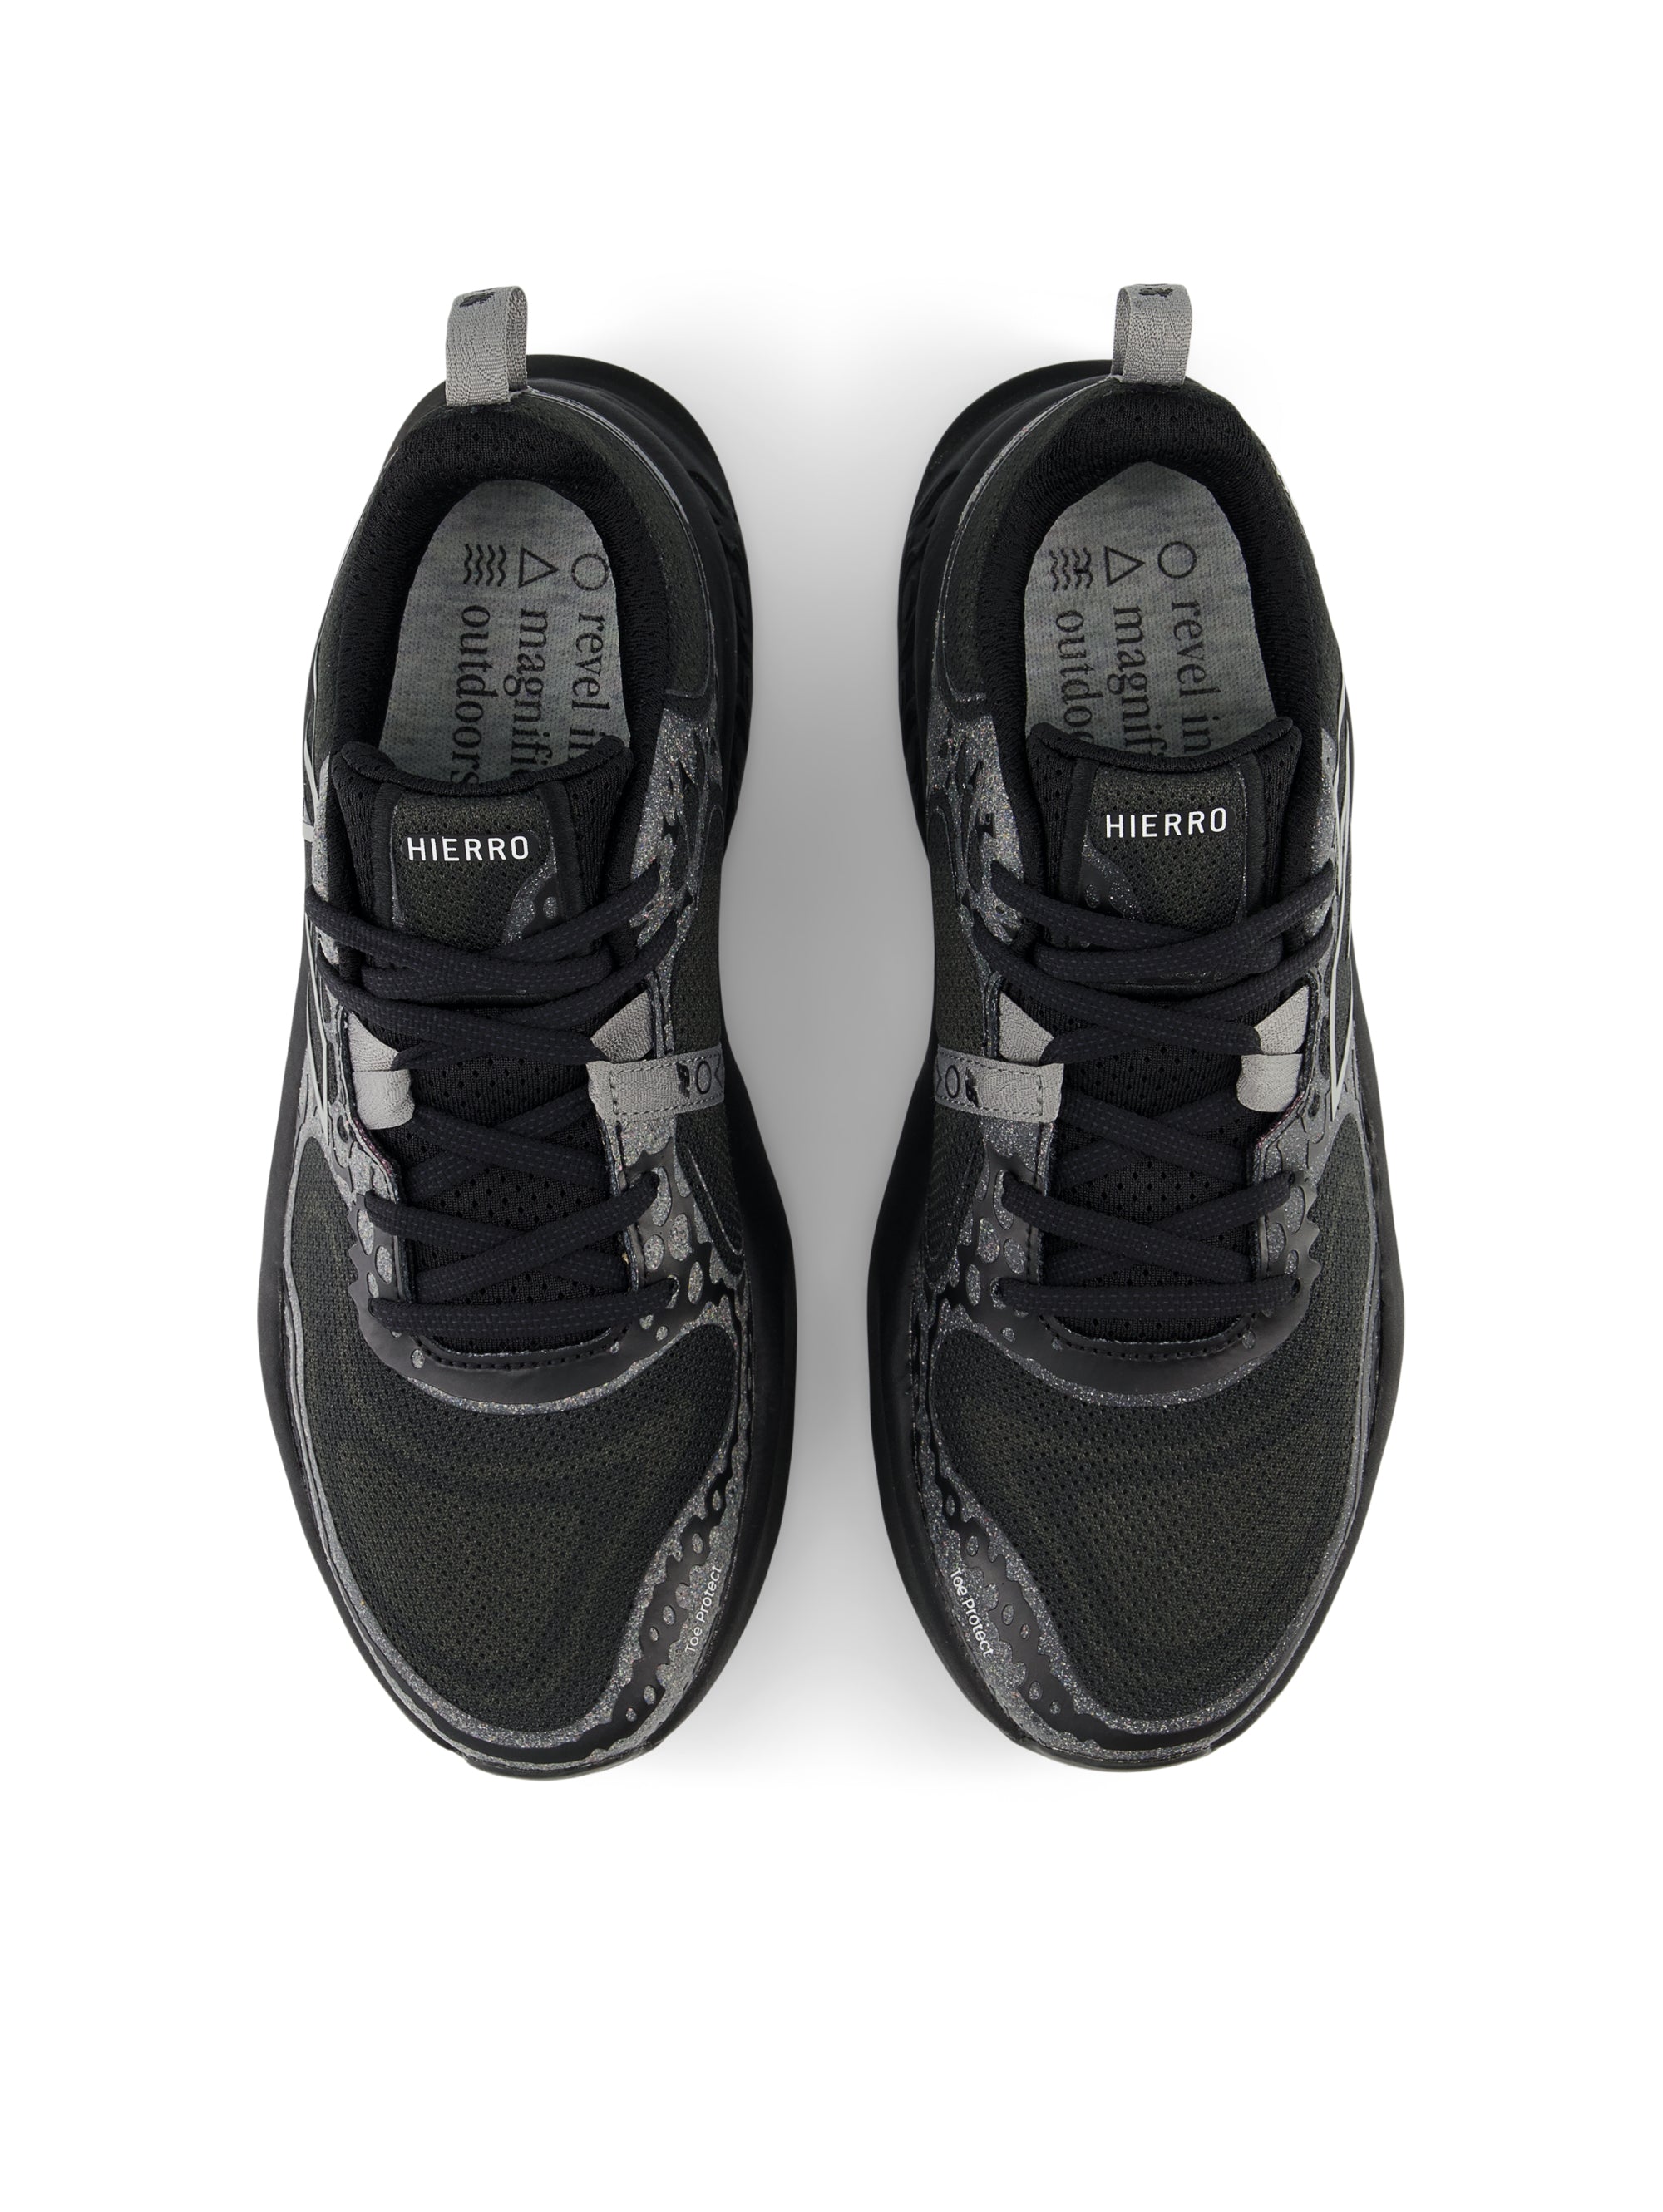 Sneakers da Uomo Hierro V8 Fresh Foam X Nero